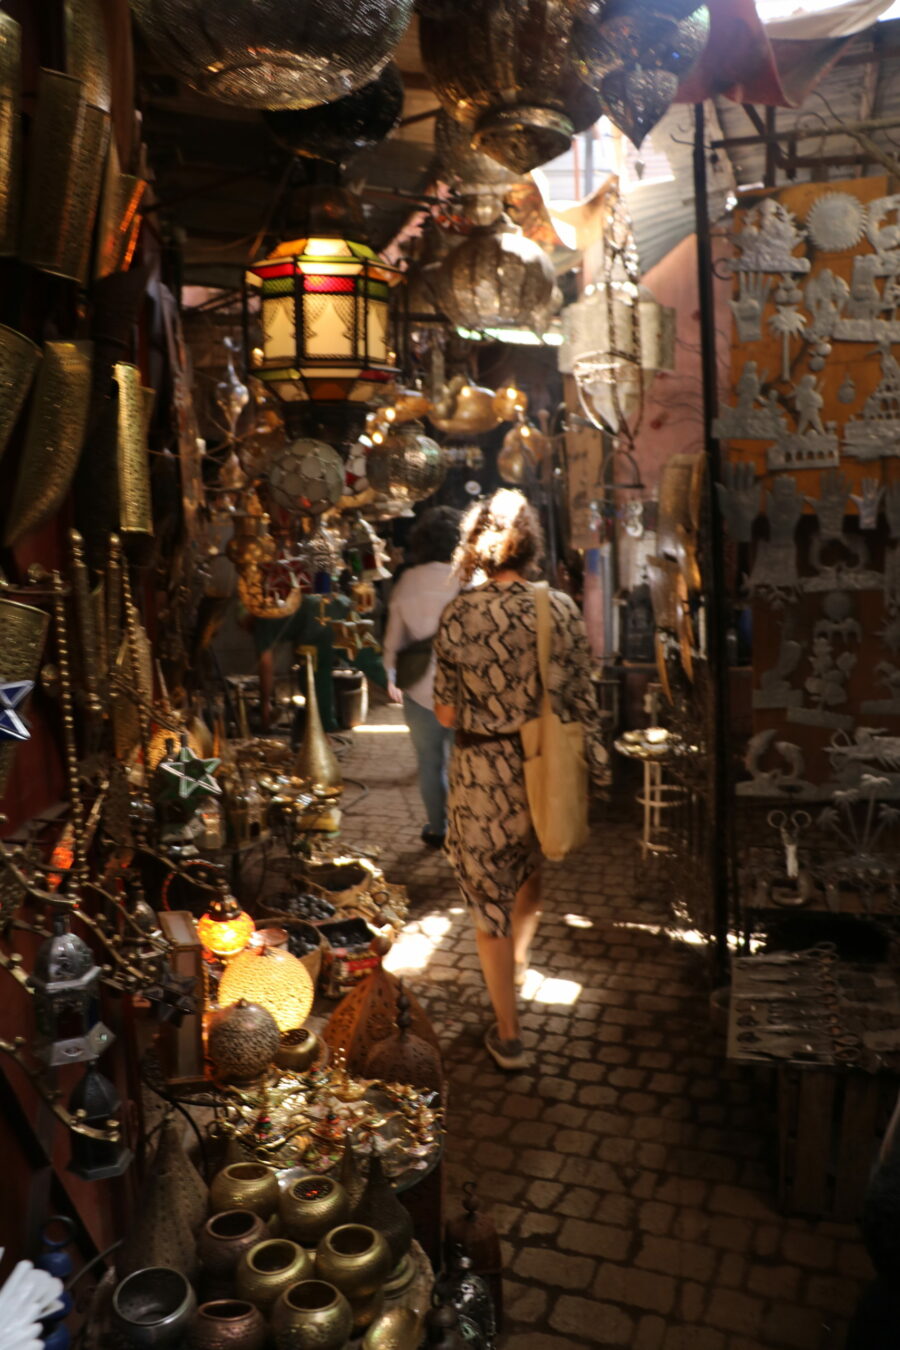 Manipura LIving shoppetur i Medinaen Marrakesh